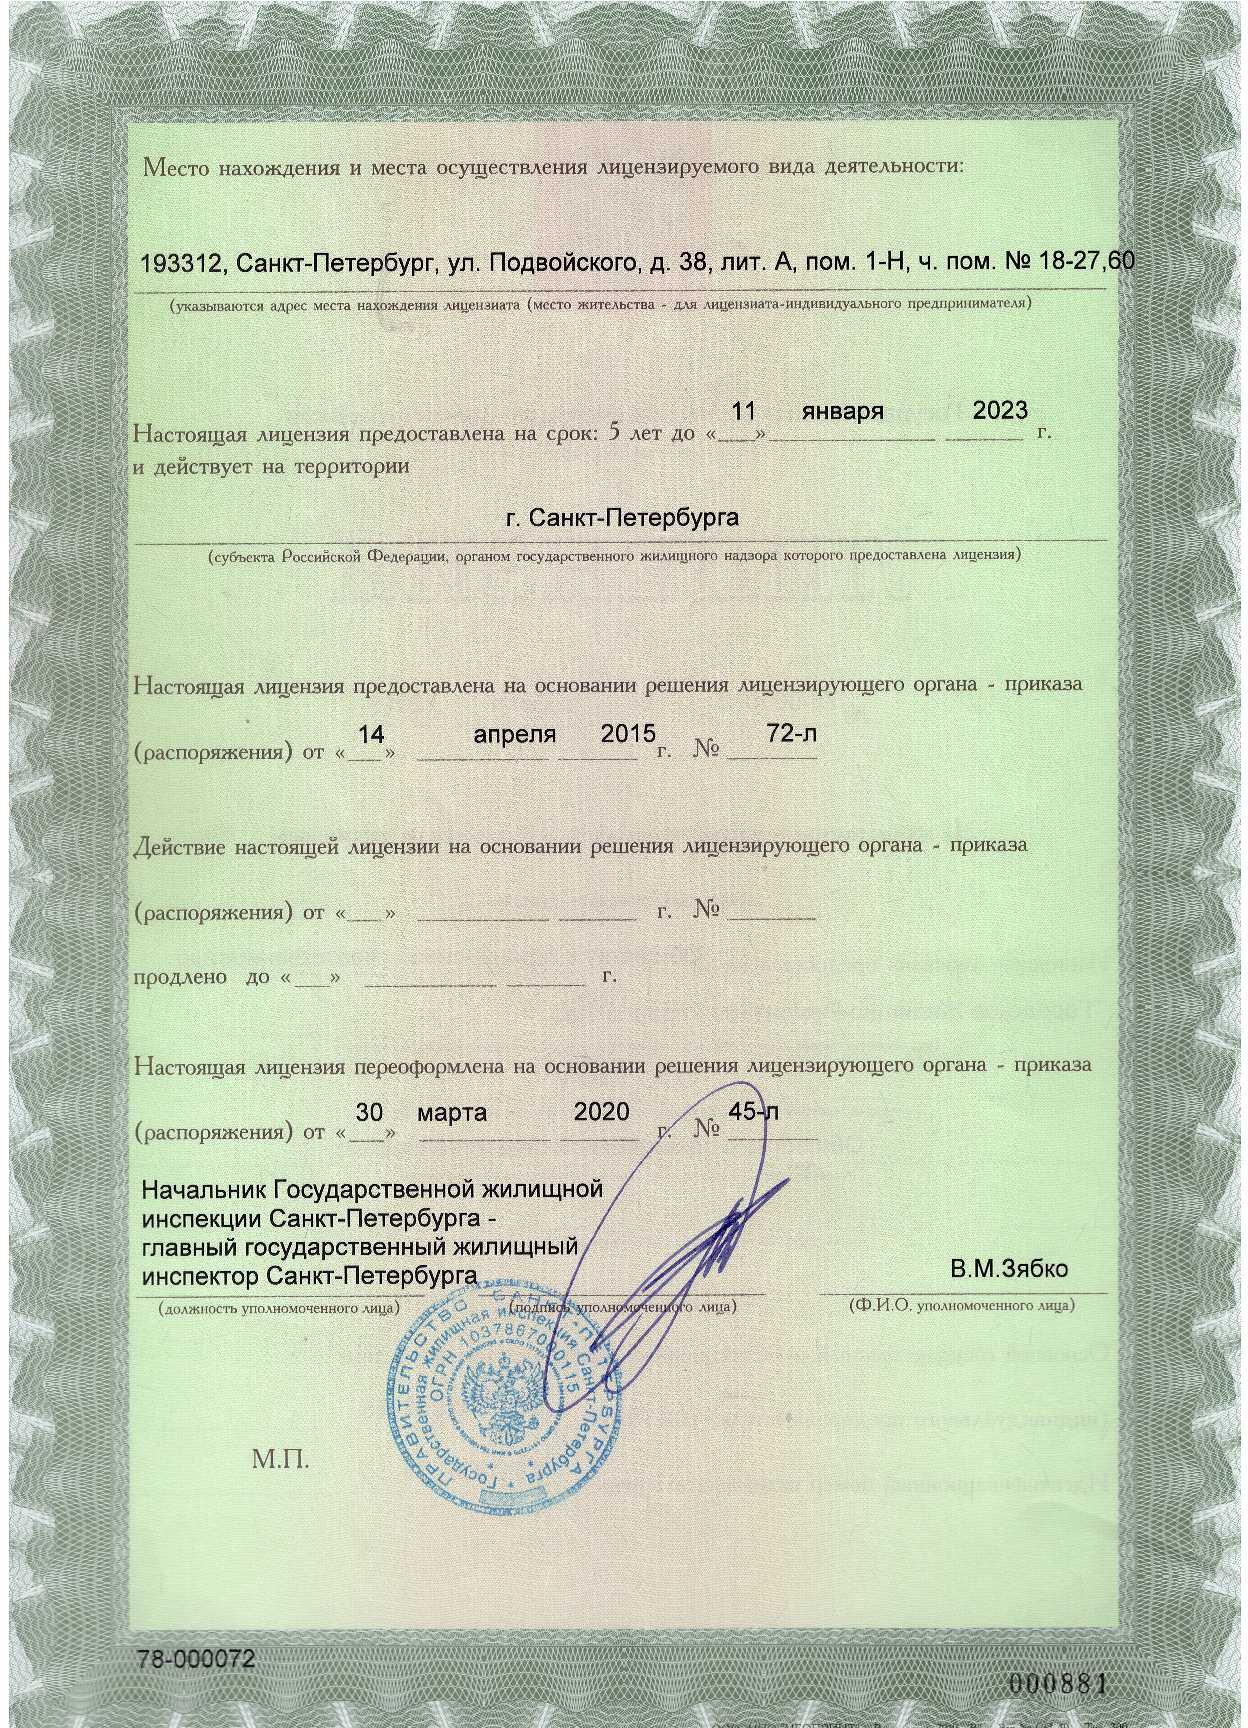 Лицензия на управление МКД №78-000072 от 14.04.2015